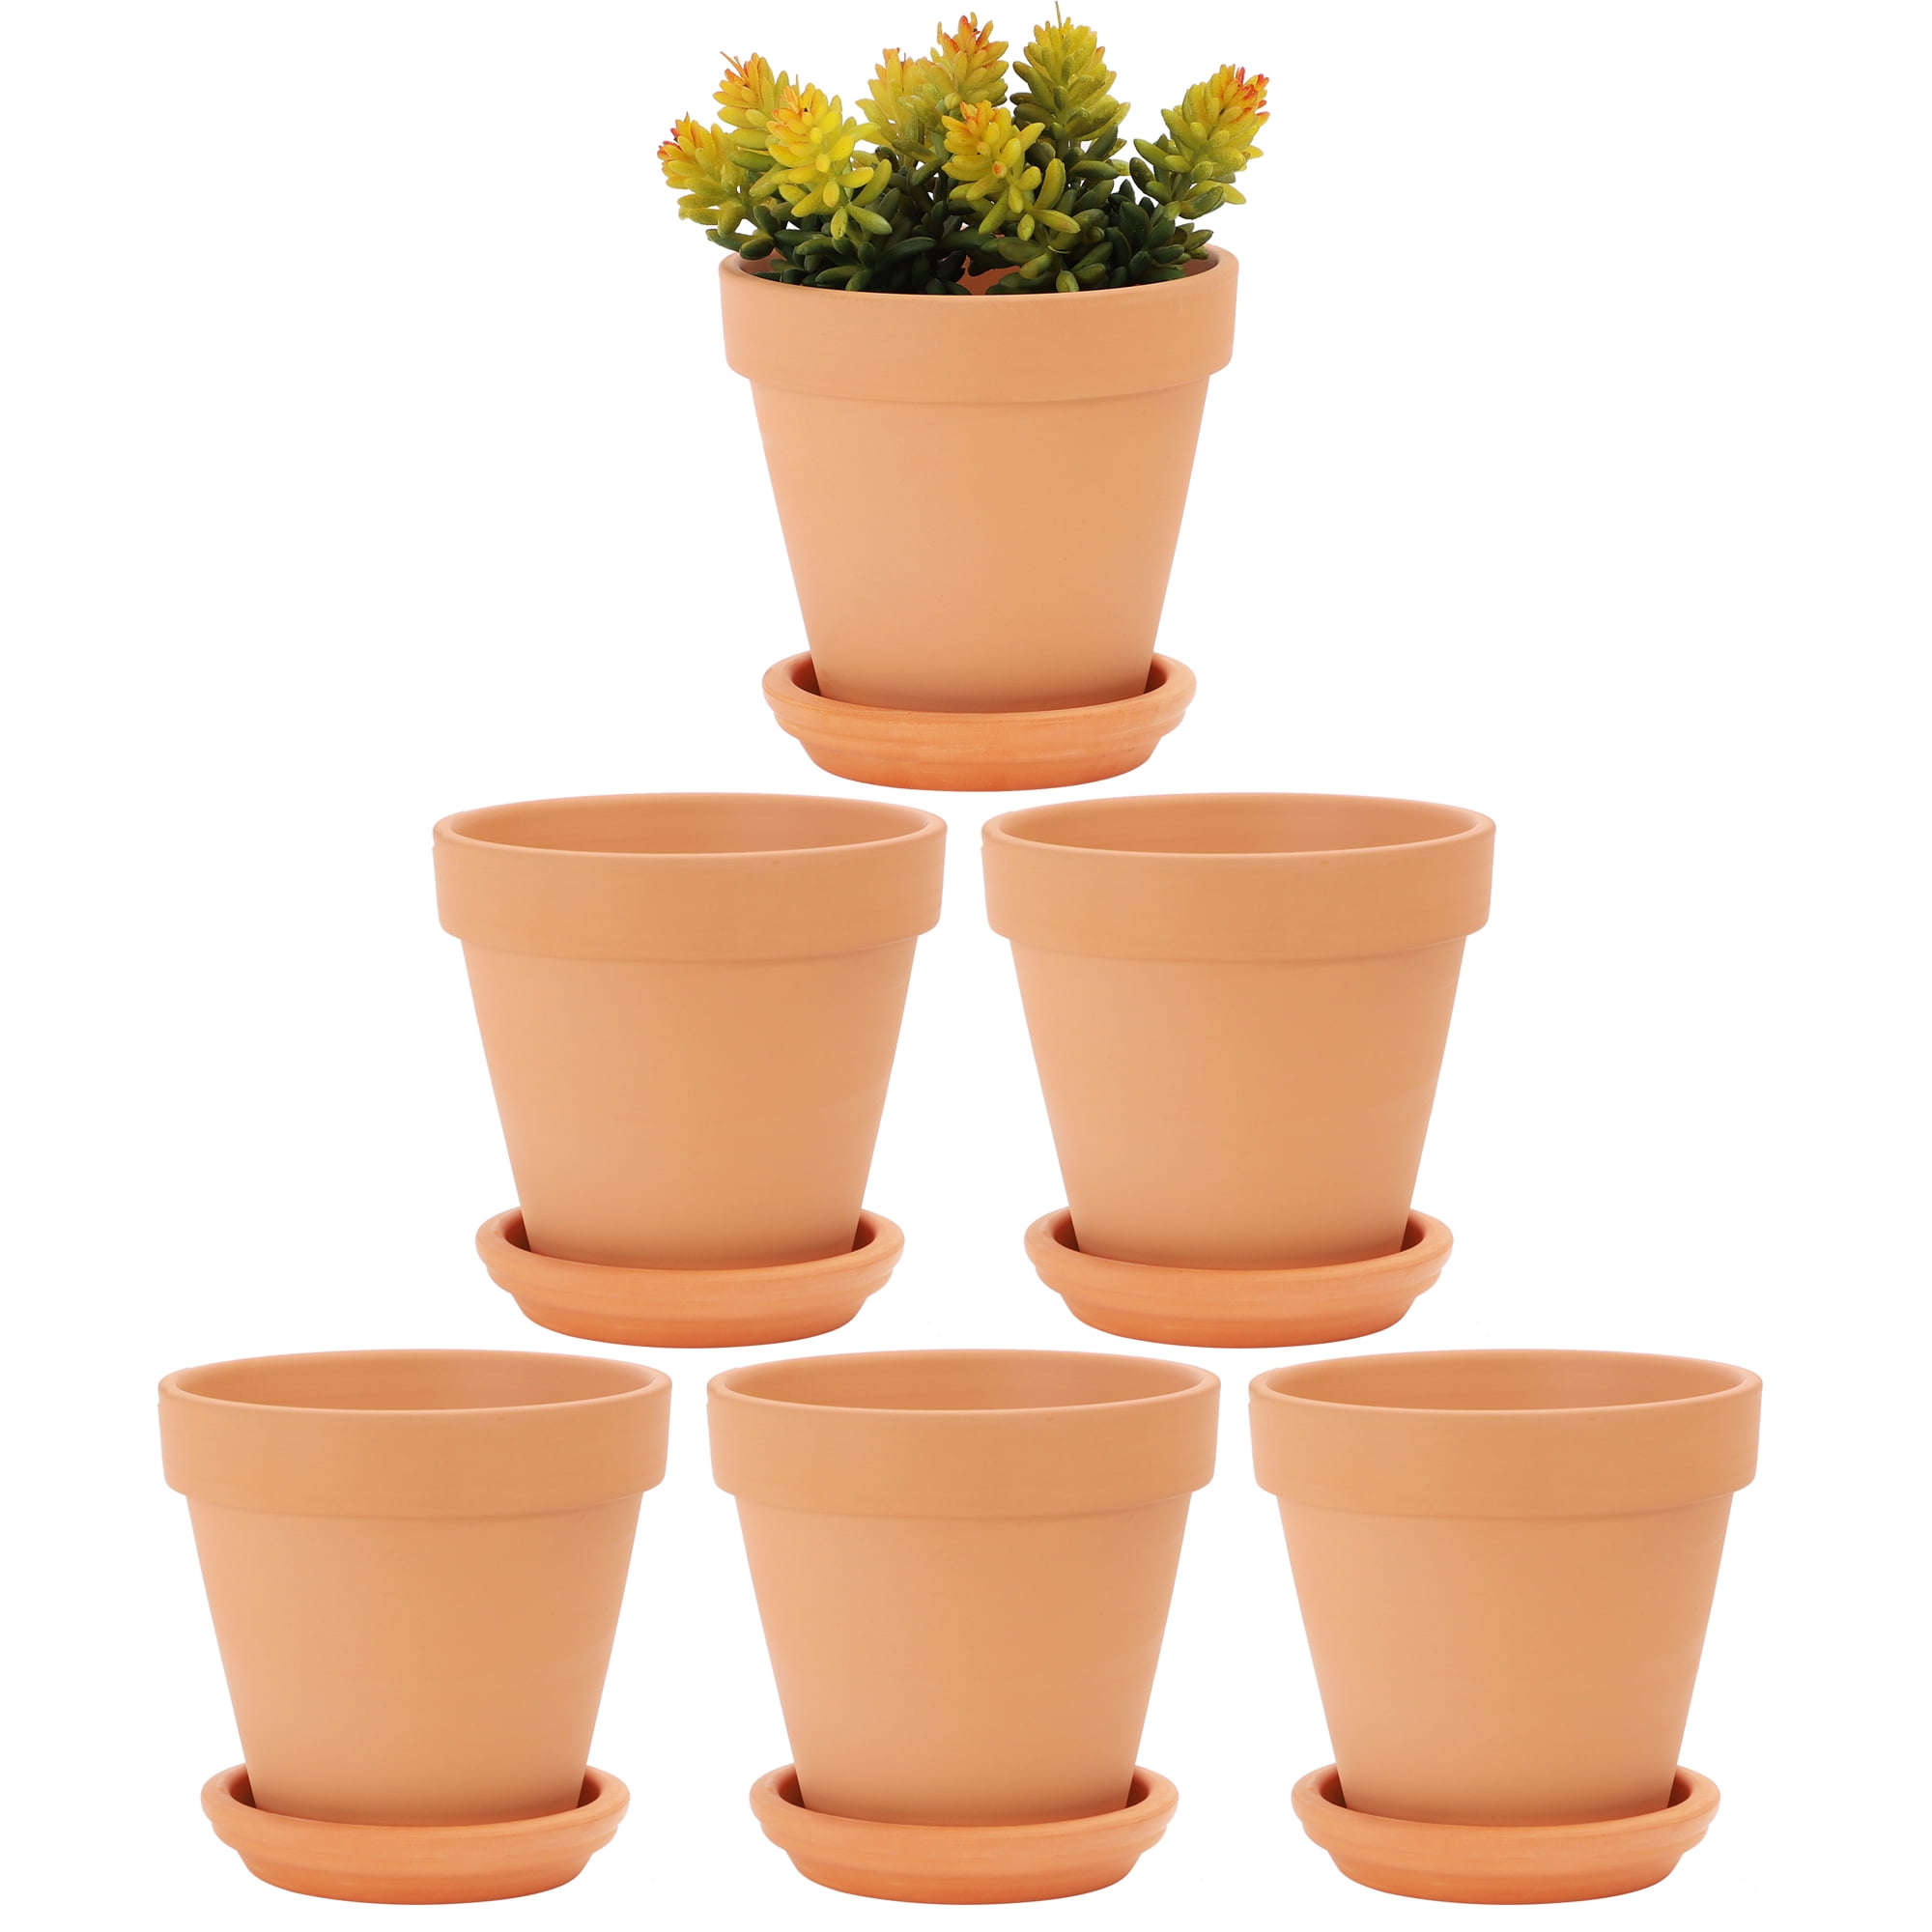 6x Small Ceramic Succulent Planter Pot With Drainage Hole Ice Crack Cactus Pot 